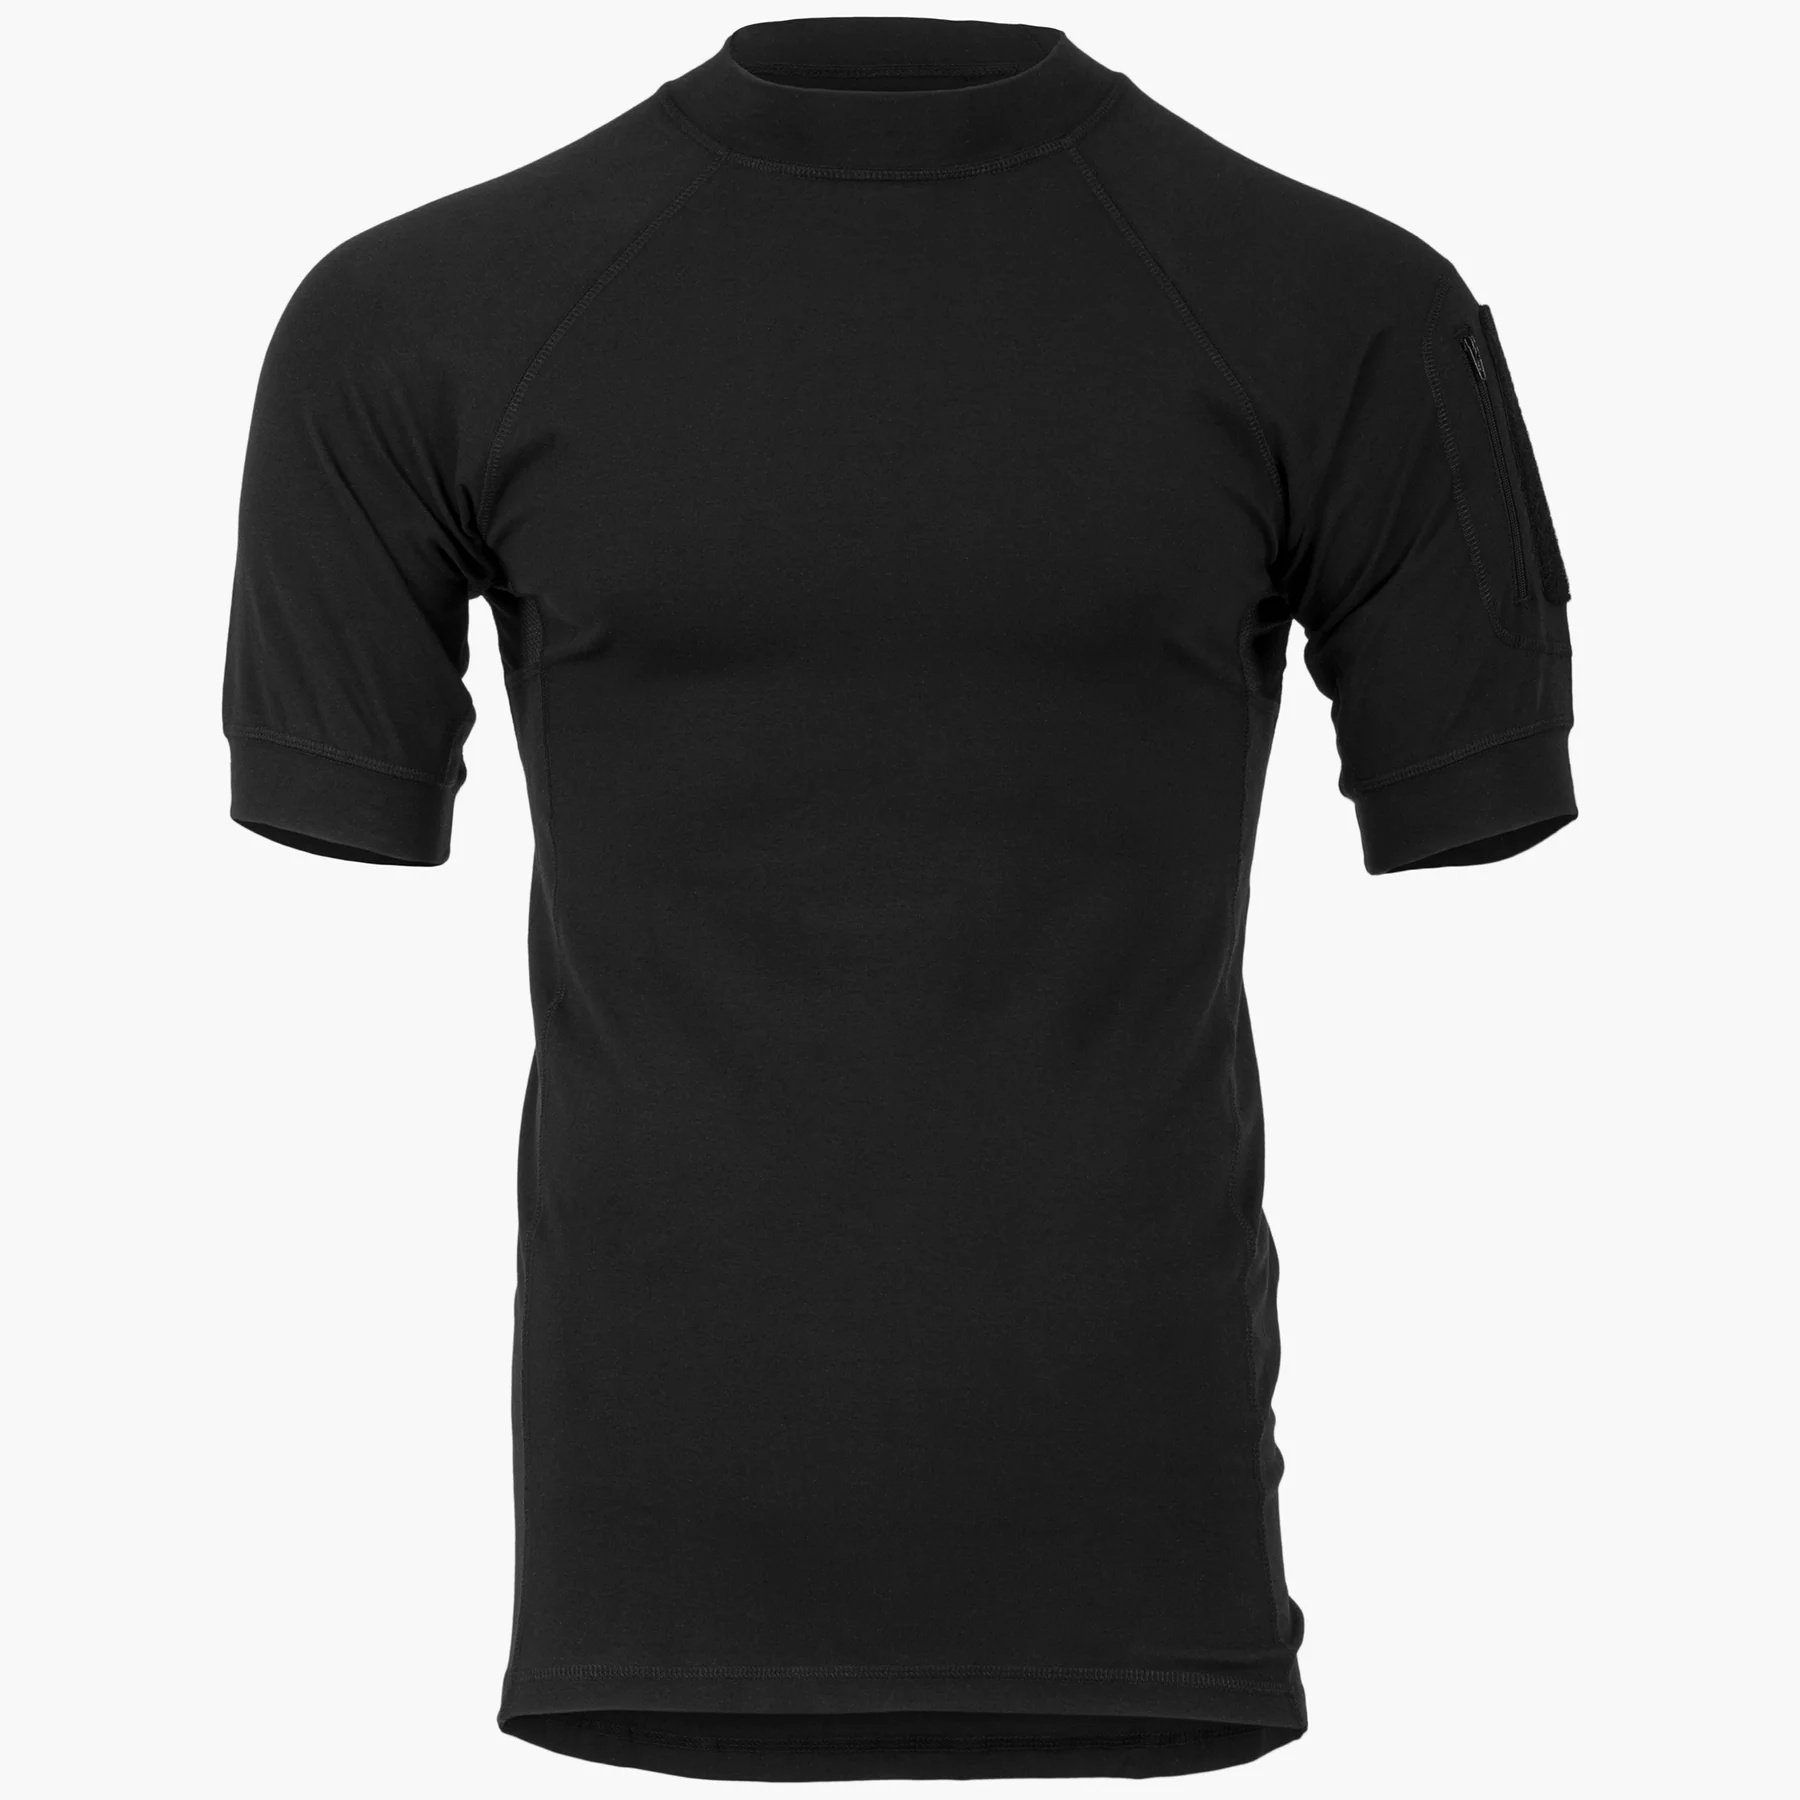 Highlander Forces Tactical Combat T-Shirt- Black